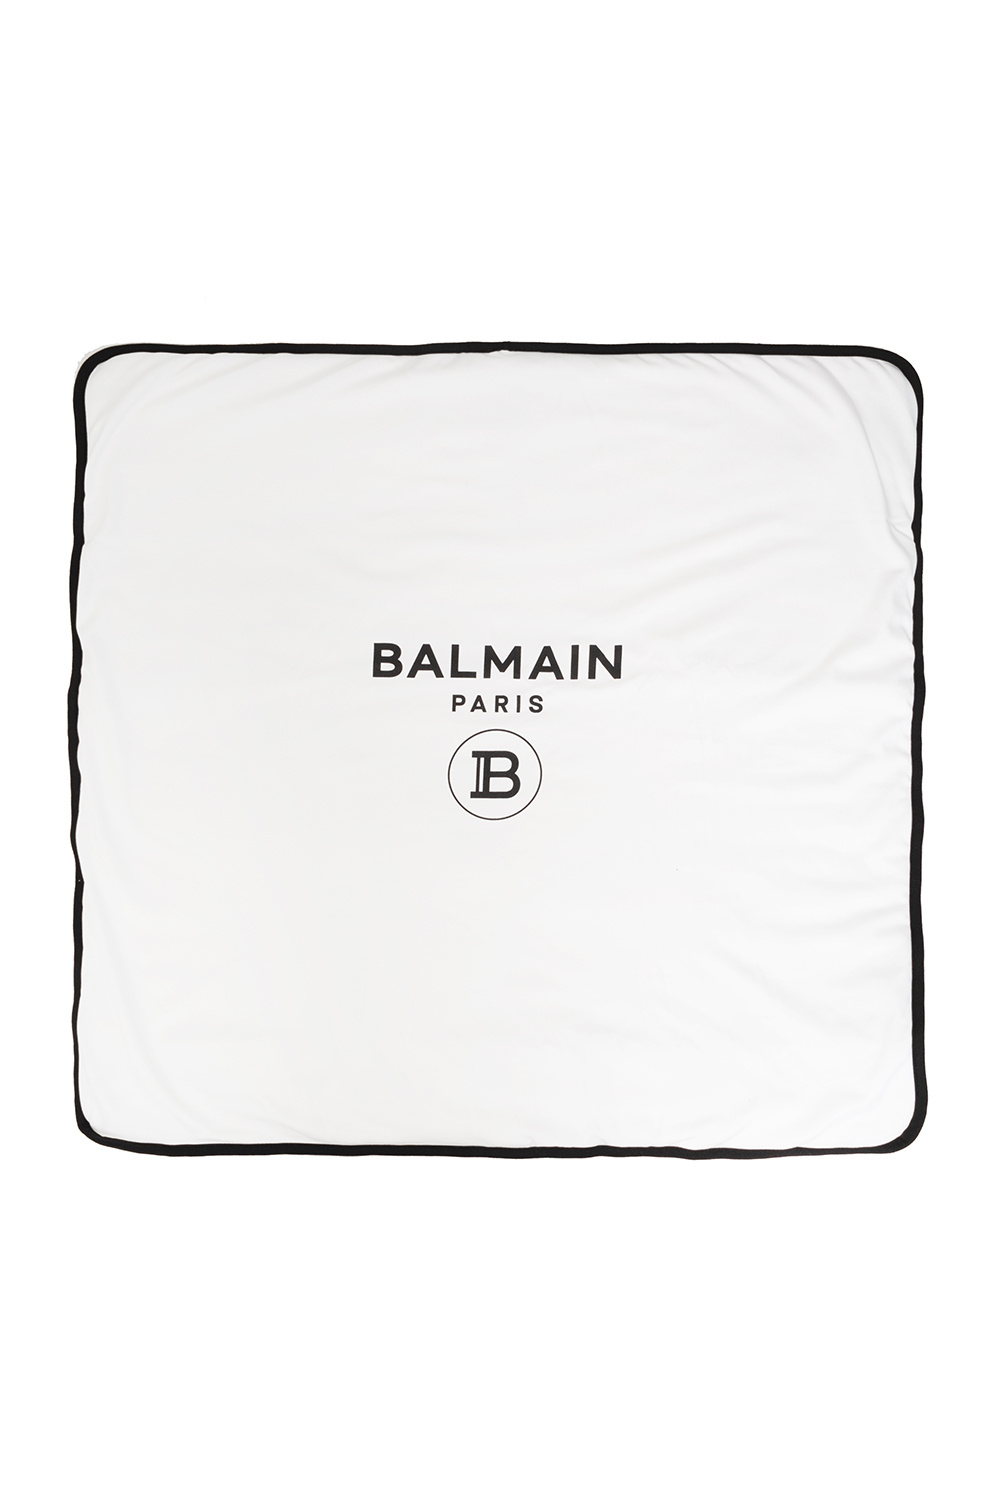 balmain pants Kids Baby blanket with logo